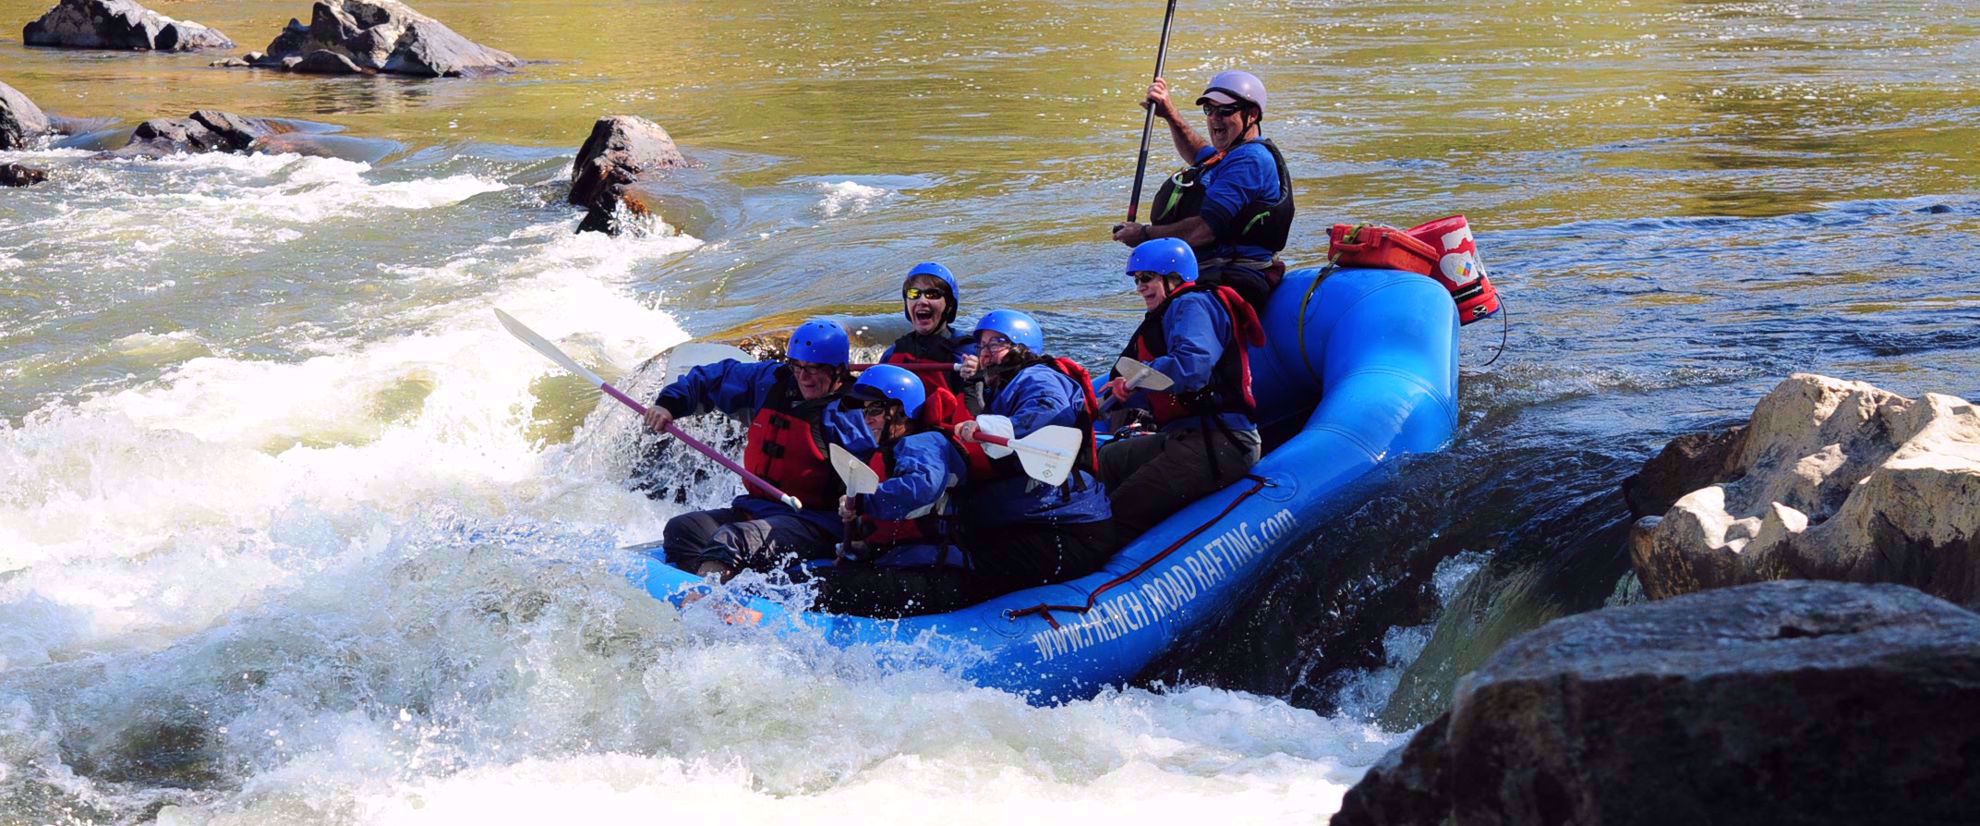 Women rafting on Blue ridge group travel adventure